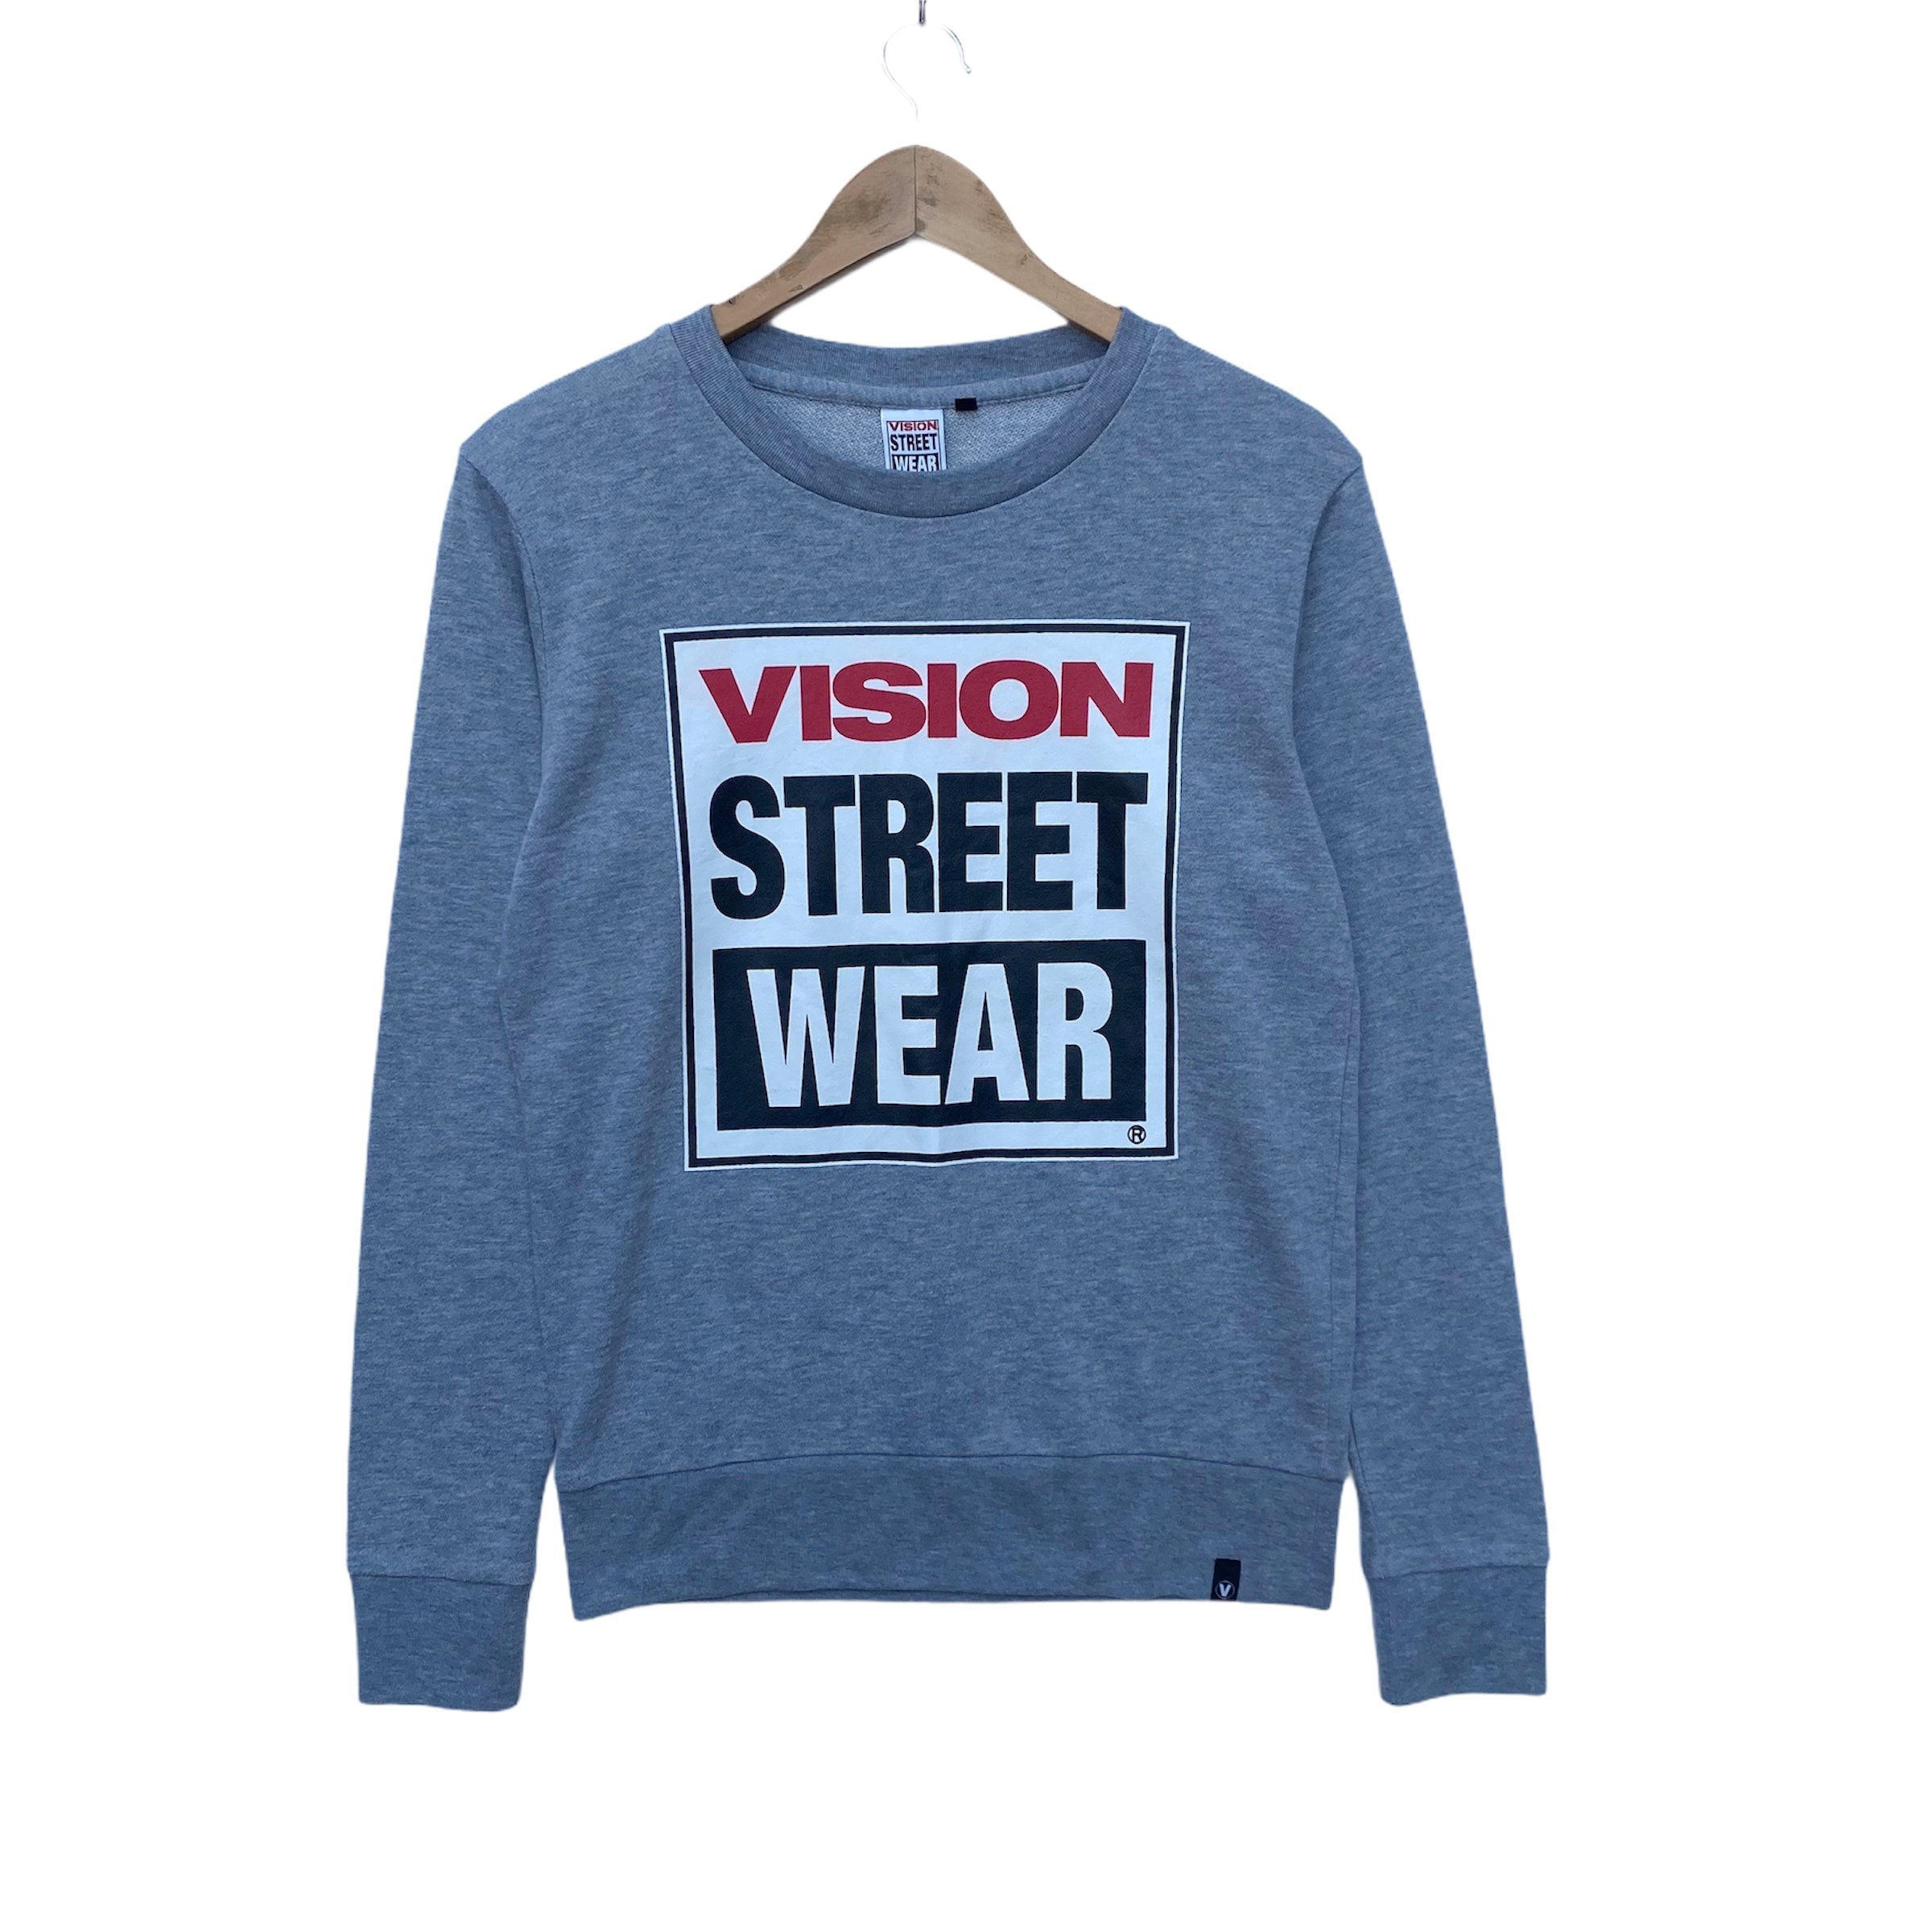 Vision Street Wear - Etsy